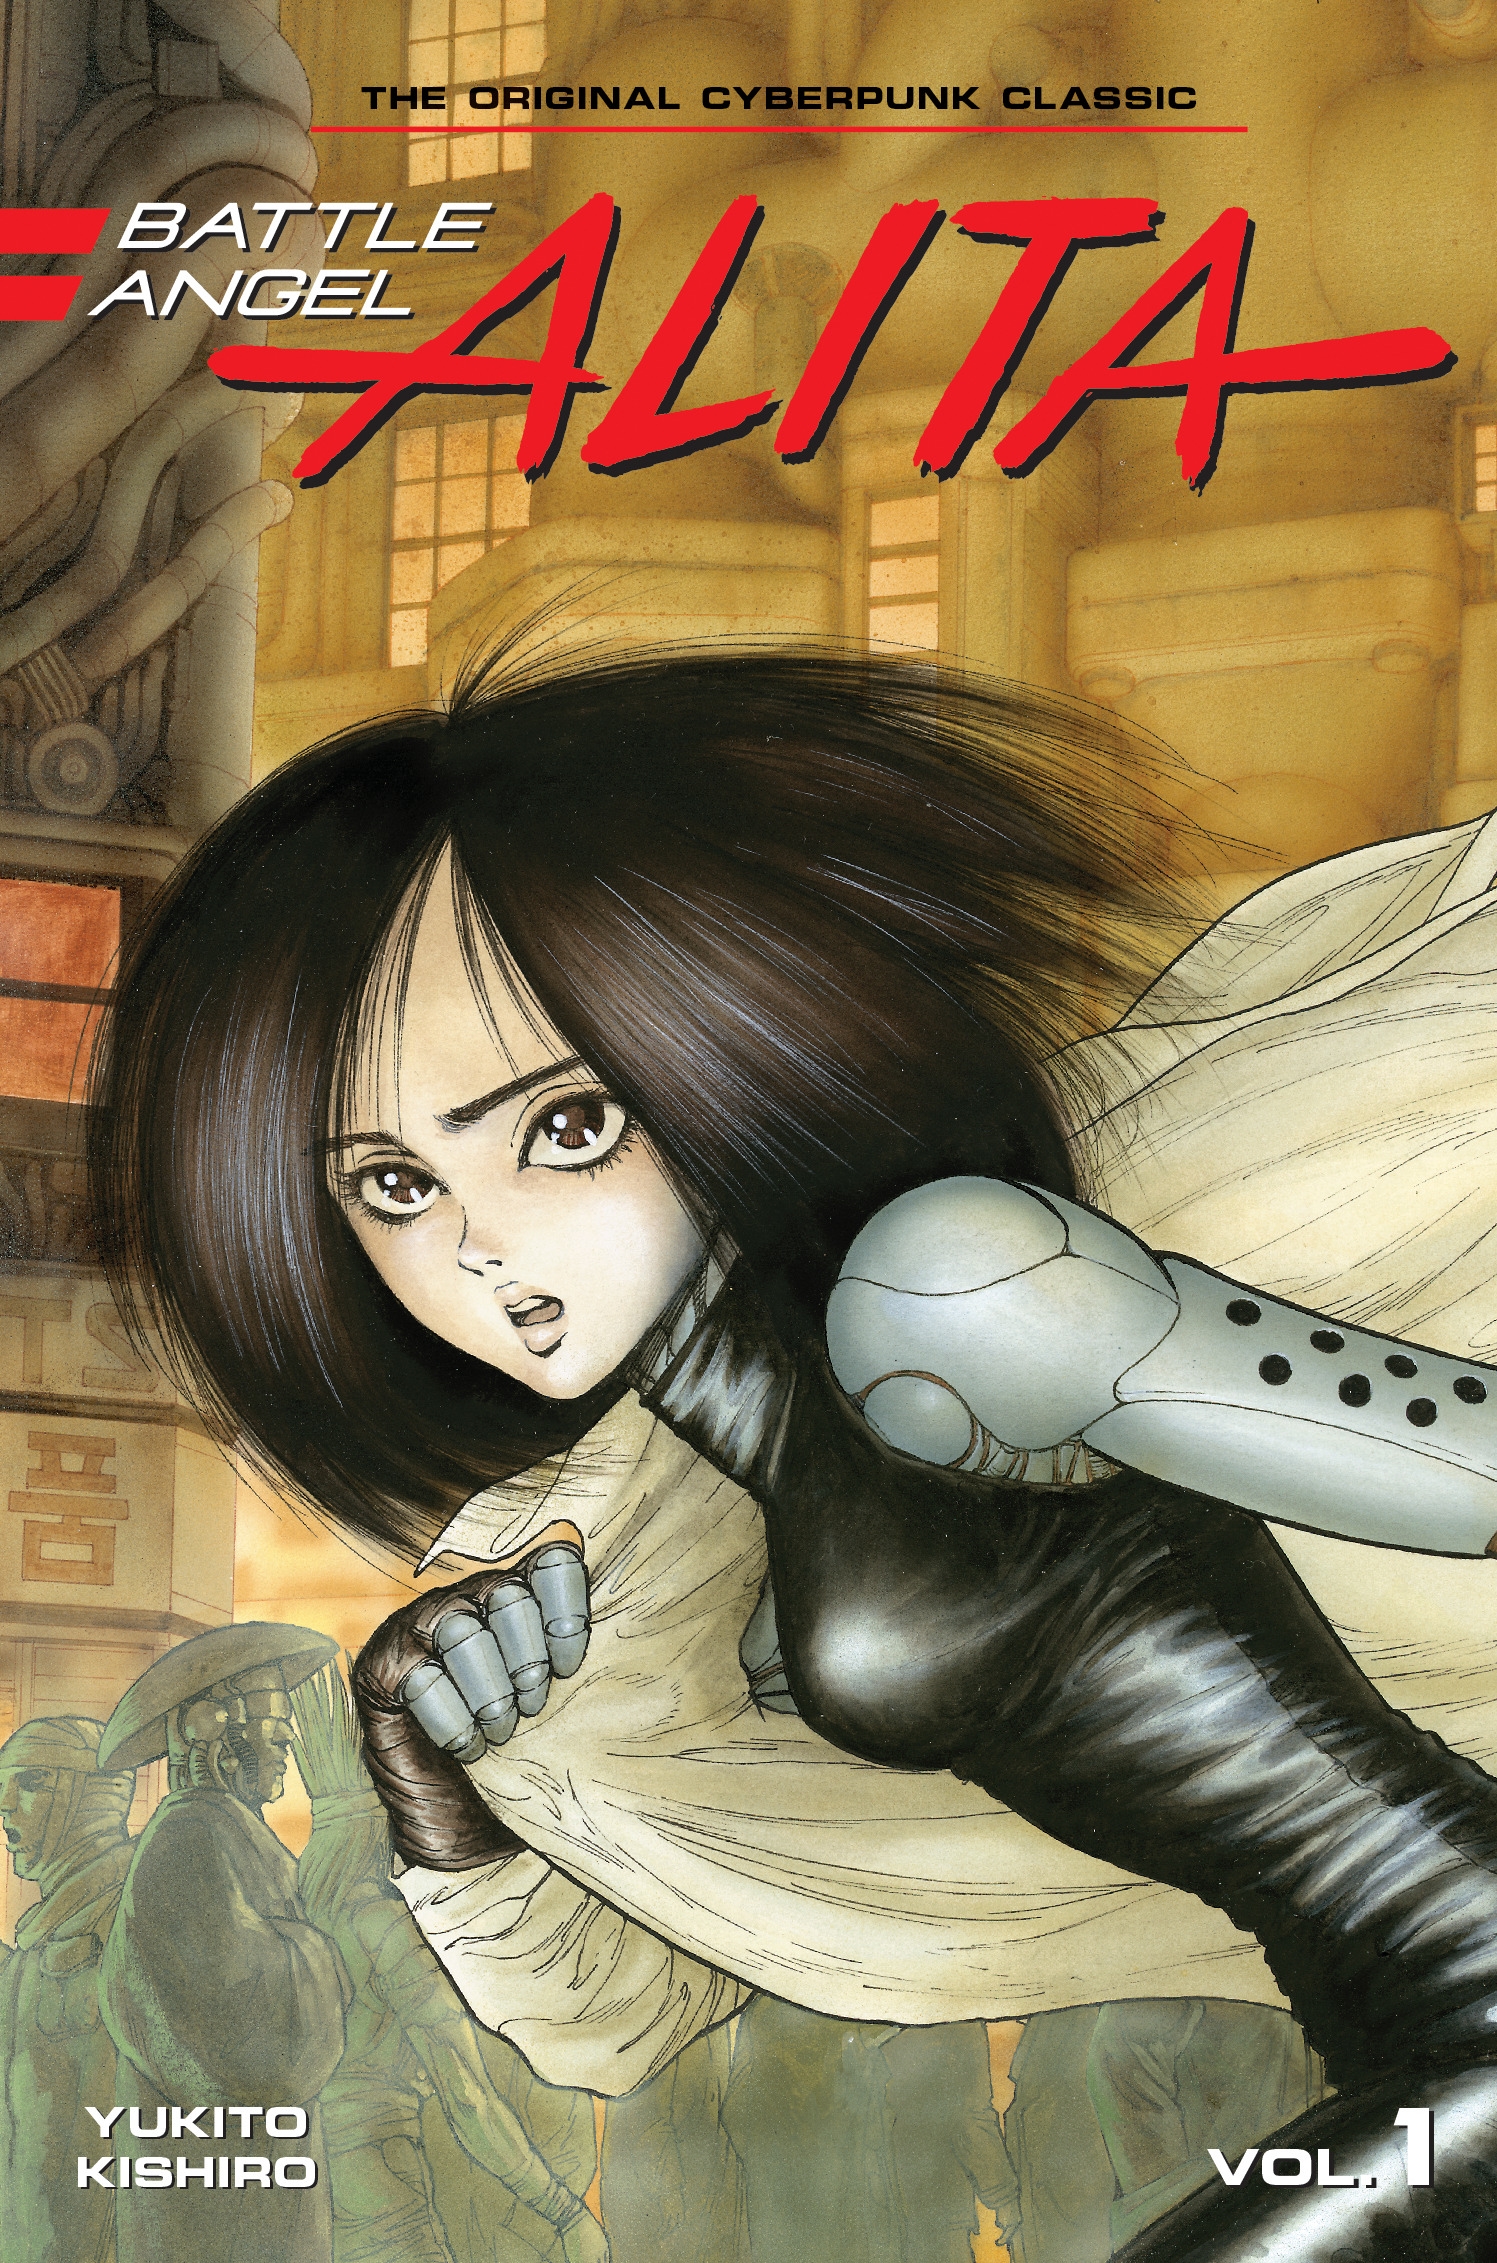 Battle Angel Alita 1 (Paperback) by Yukito Kishiro - Penguin Books Australia